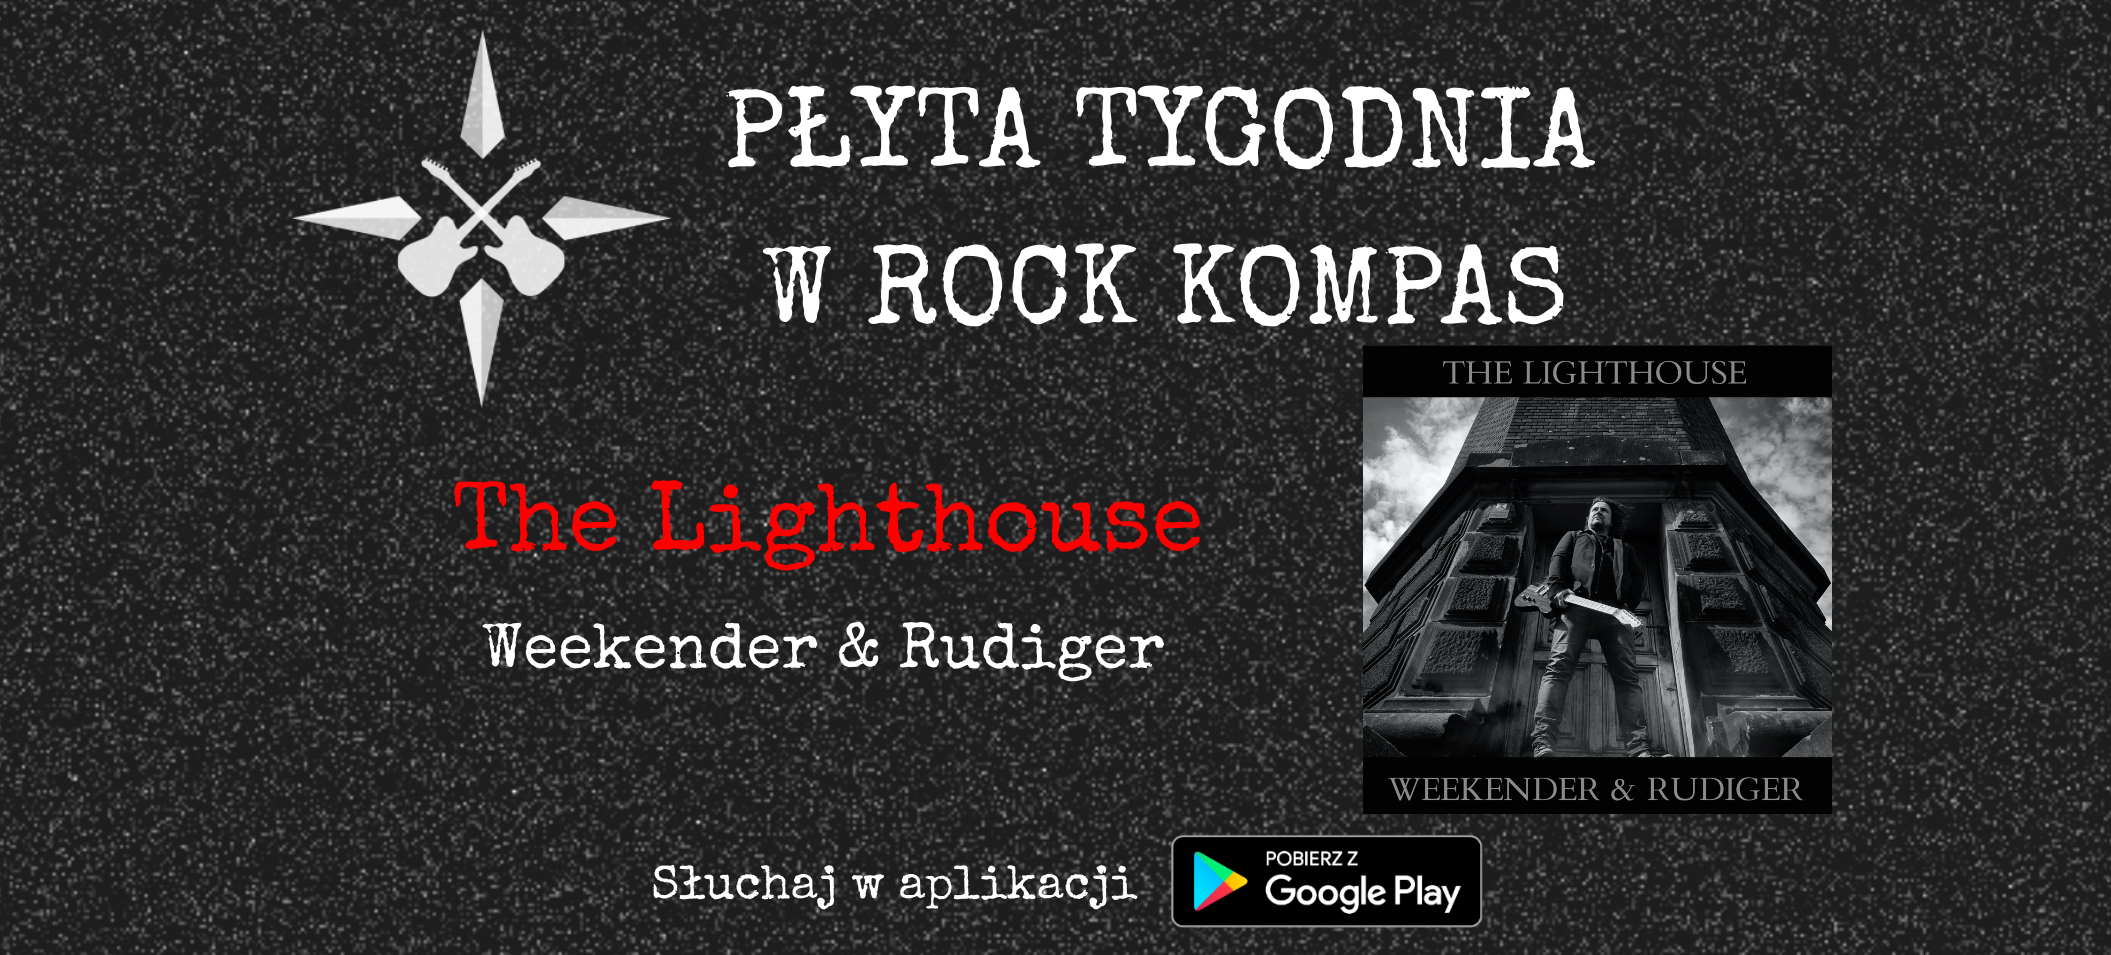 Płyta tygodnia w Rock Kompas: - The Lighthouse - Weekender & Rudiger